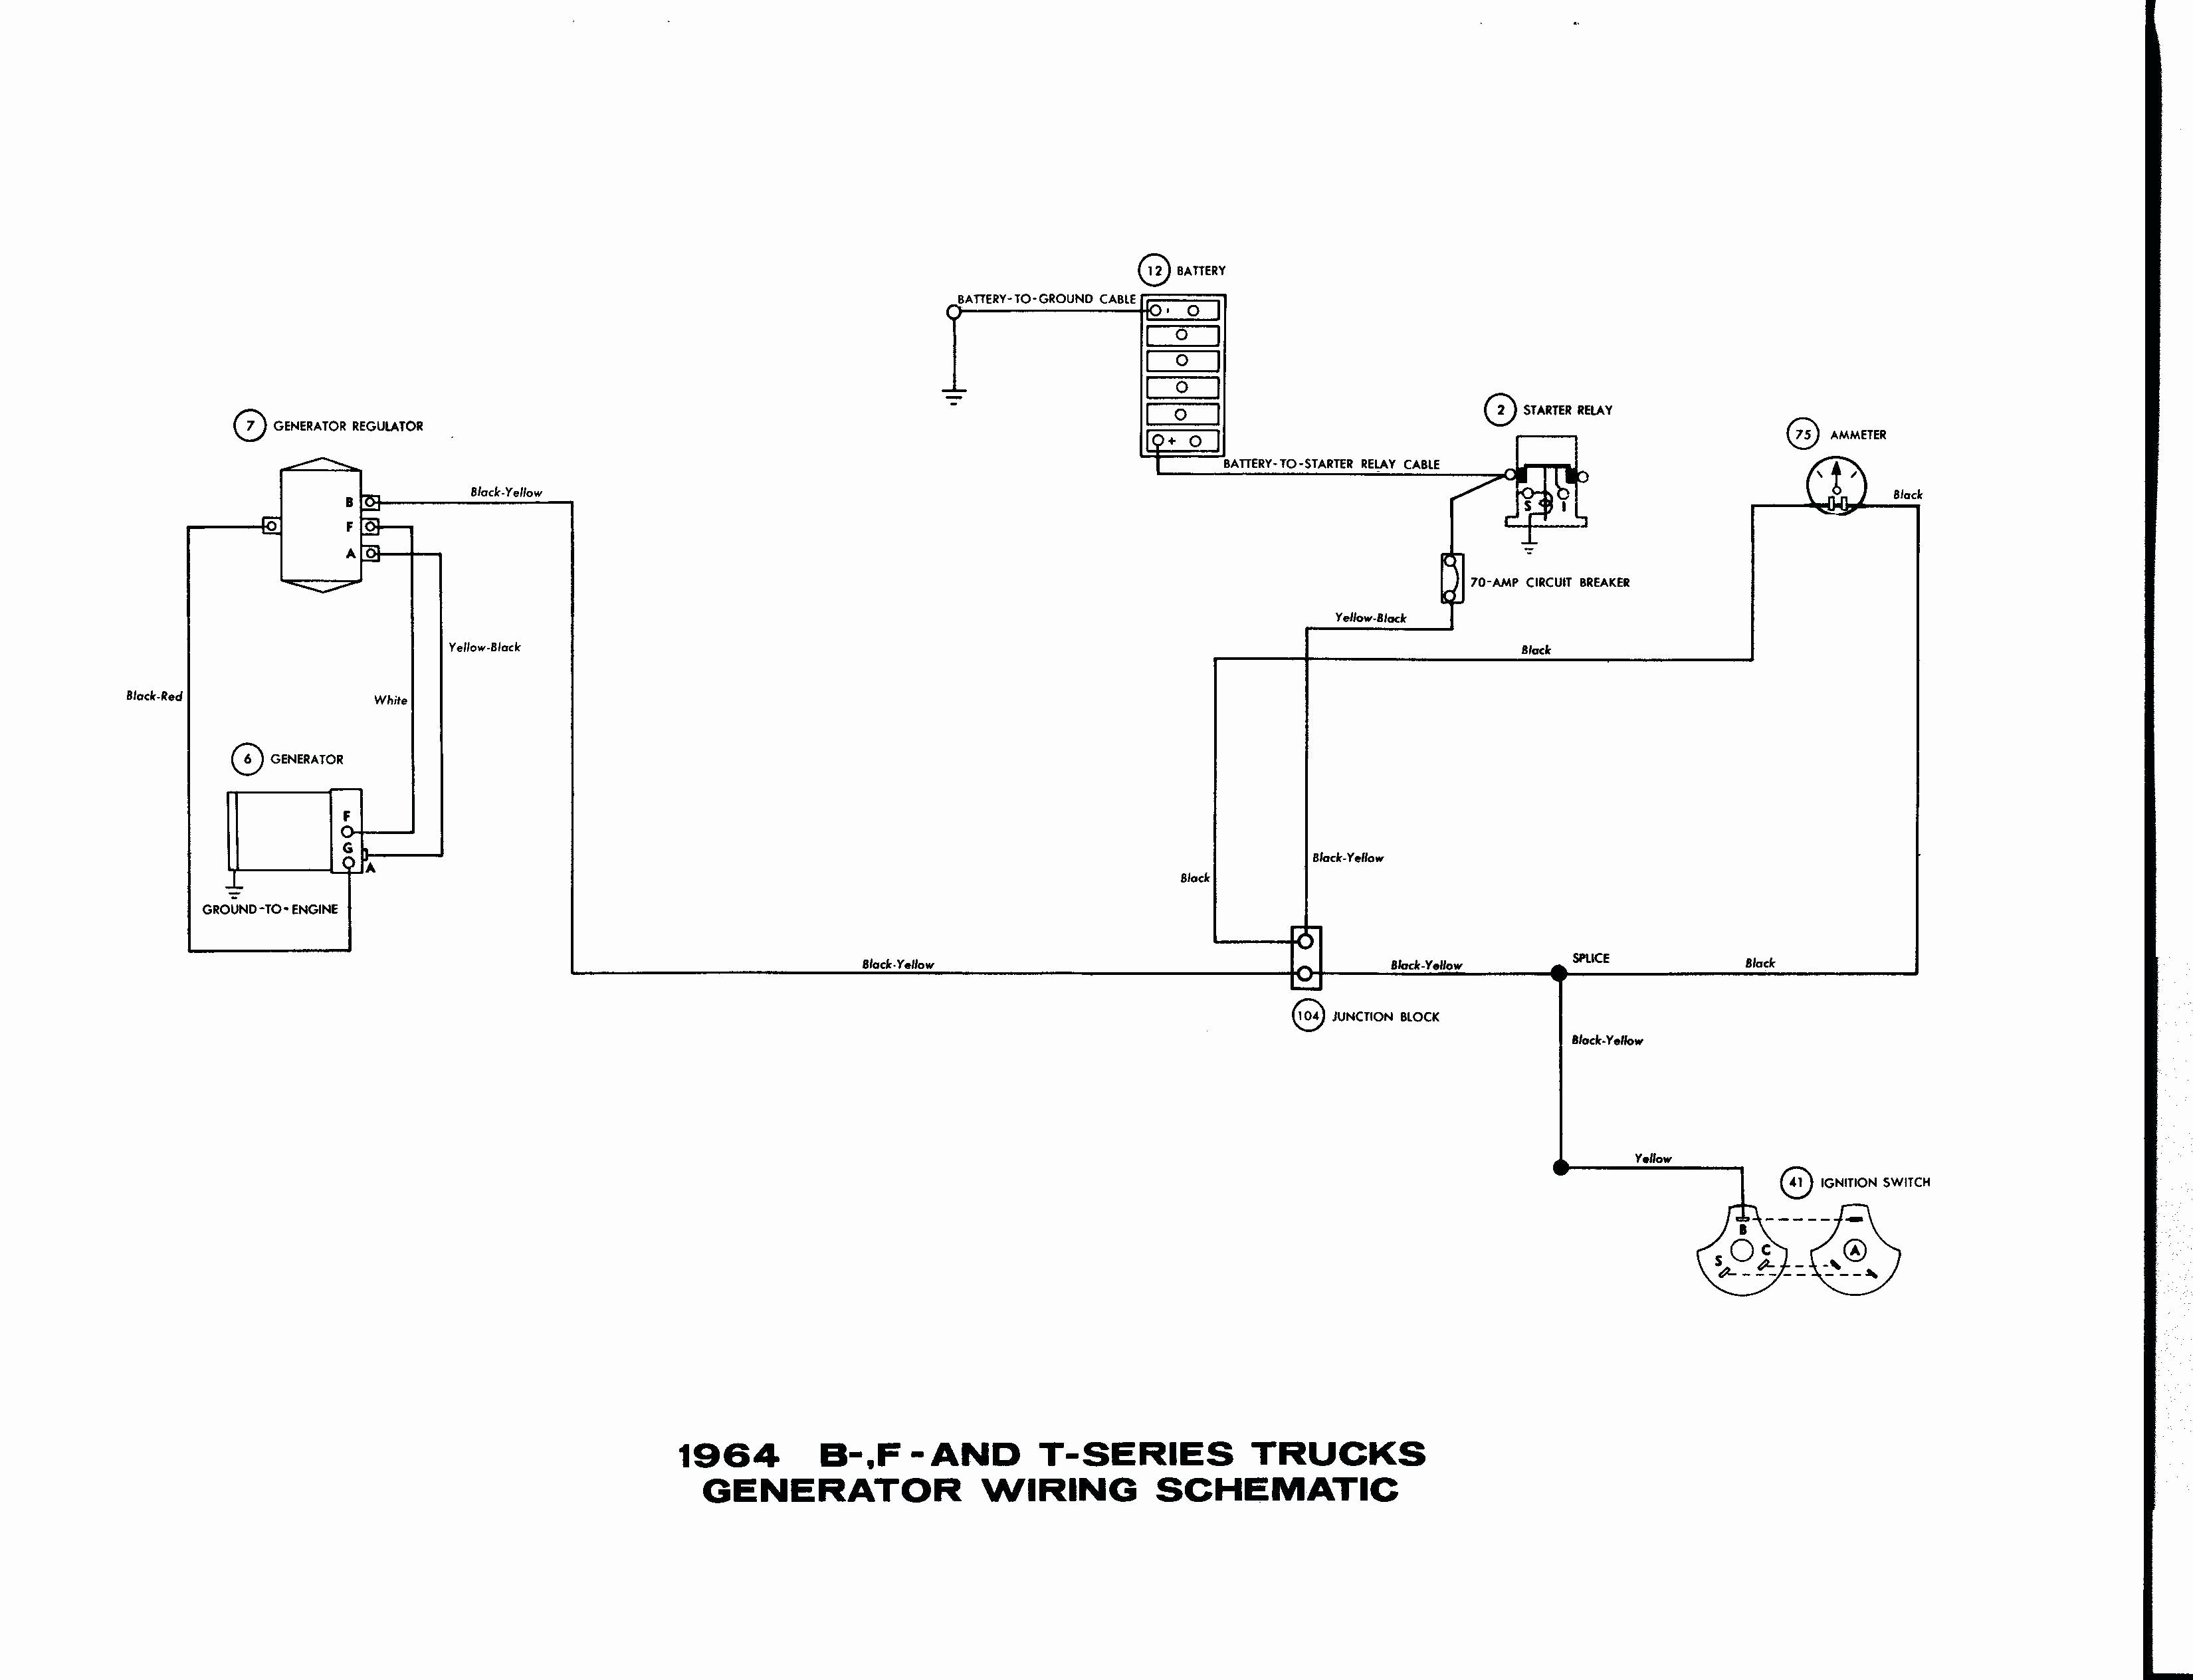 Powermaster One Wire Alternator Diagram | Manual E-Books - Powermaster Alternator Wiring Diagram